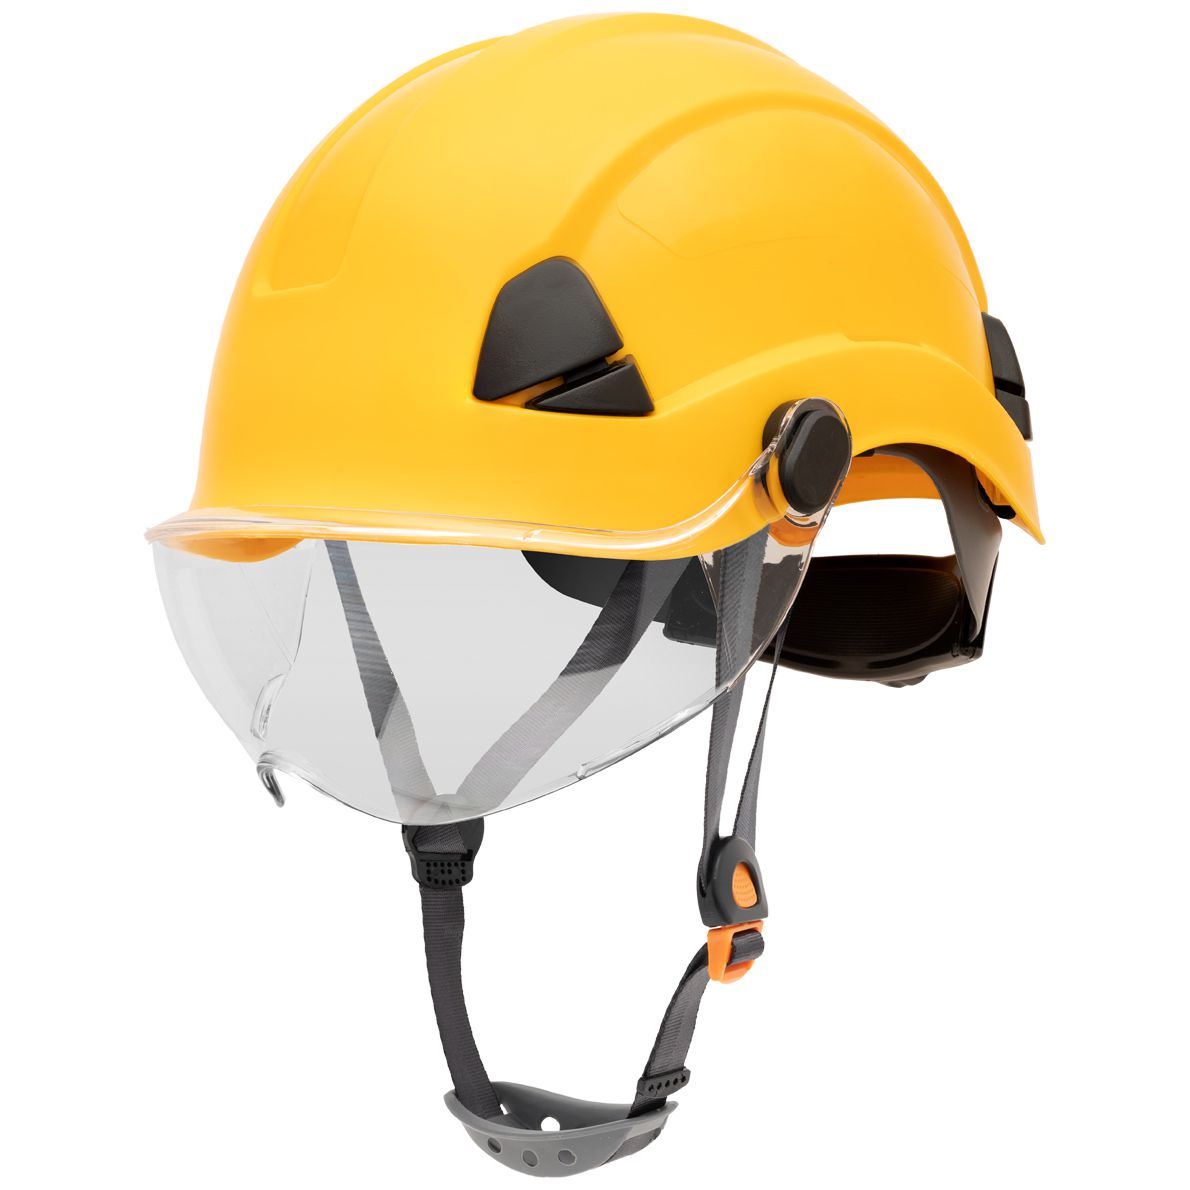 Honeywell Fibre Metal electrician's hard hat - hard hat for construction & industry - EN 166/397/50365 - with flip-up visor - yellow